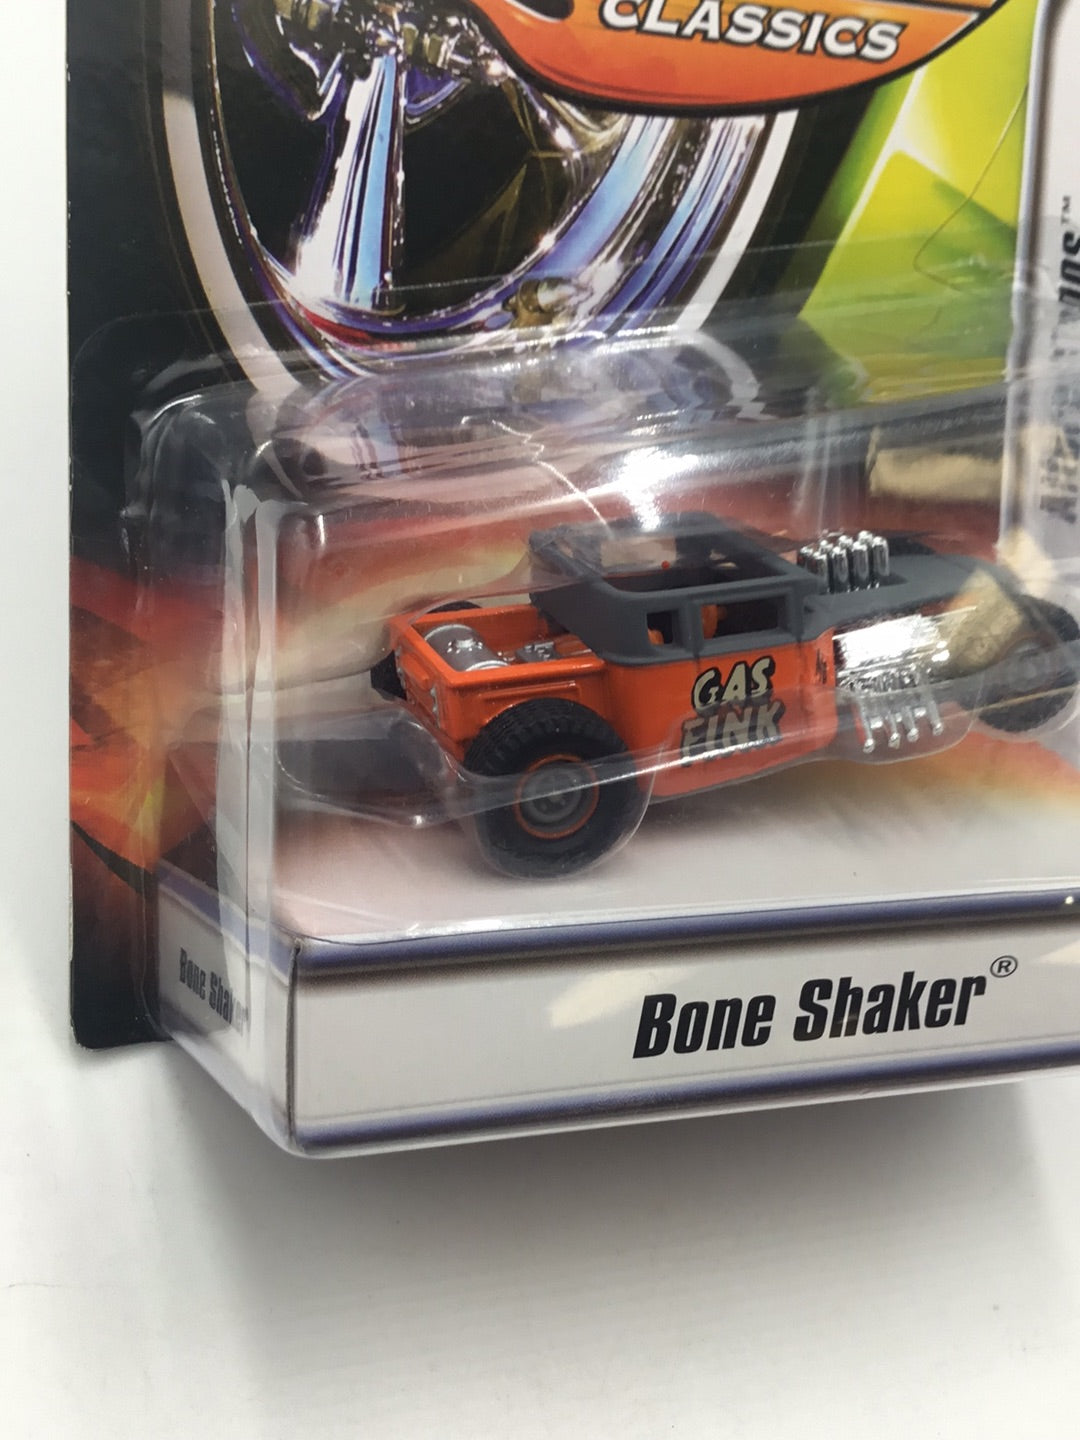 Hot wheels custom classics Bone Shaker Gas Fink